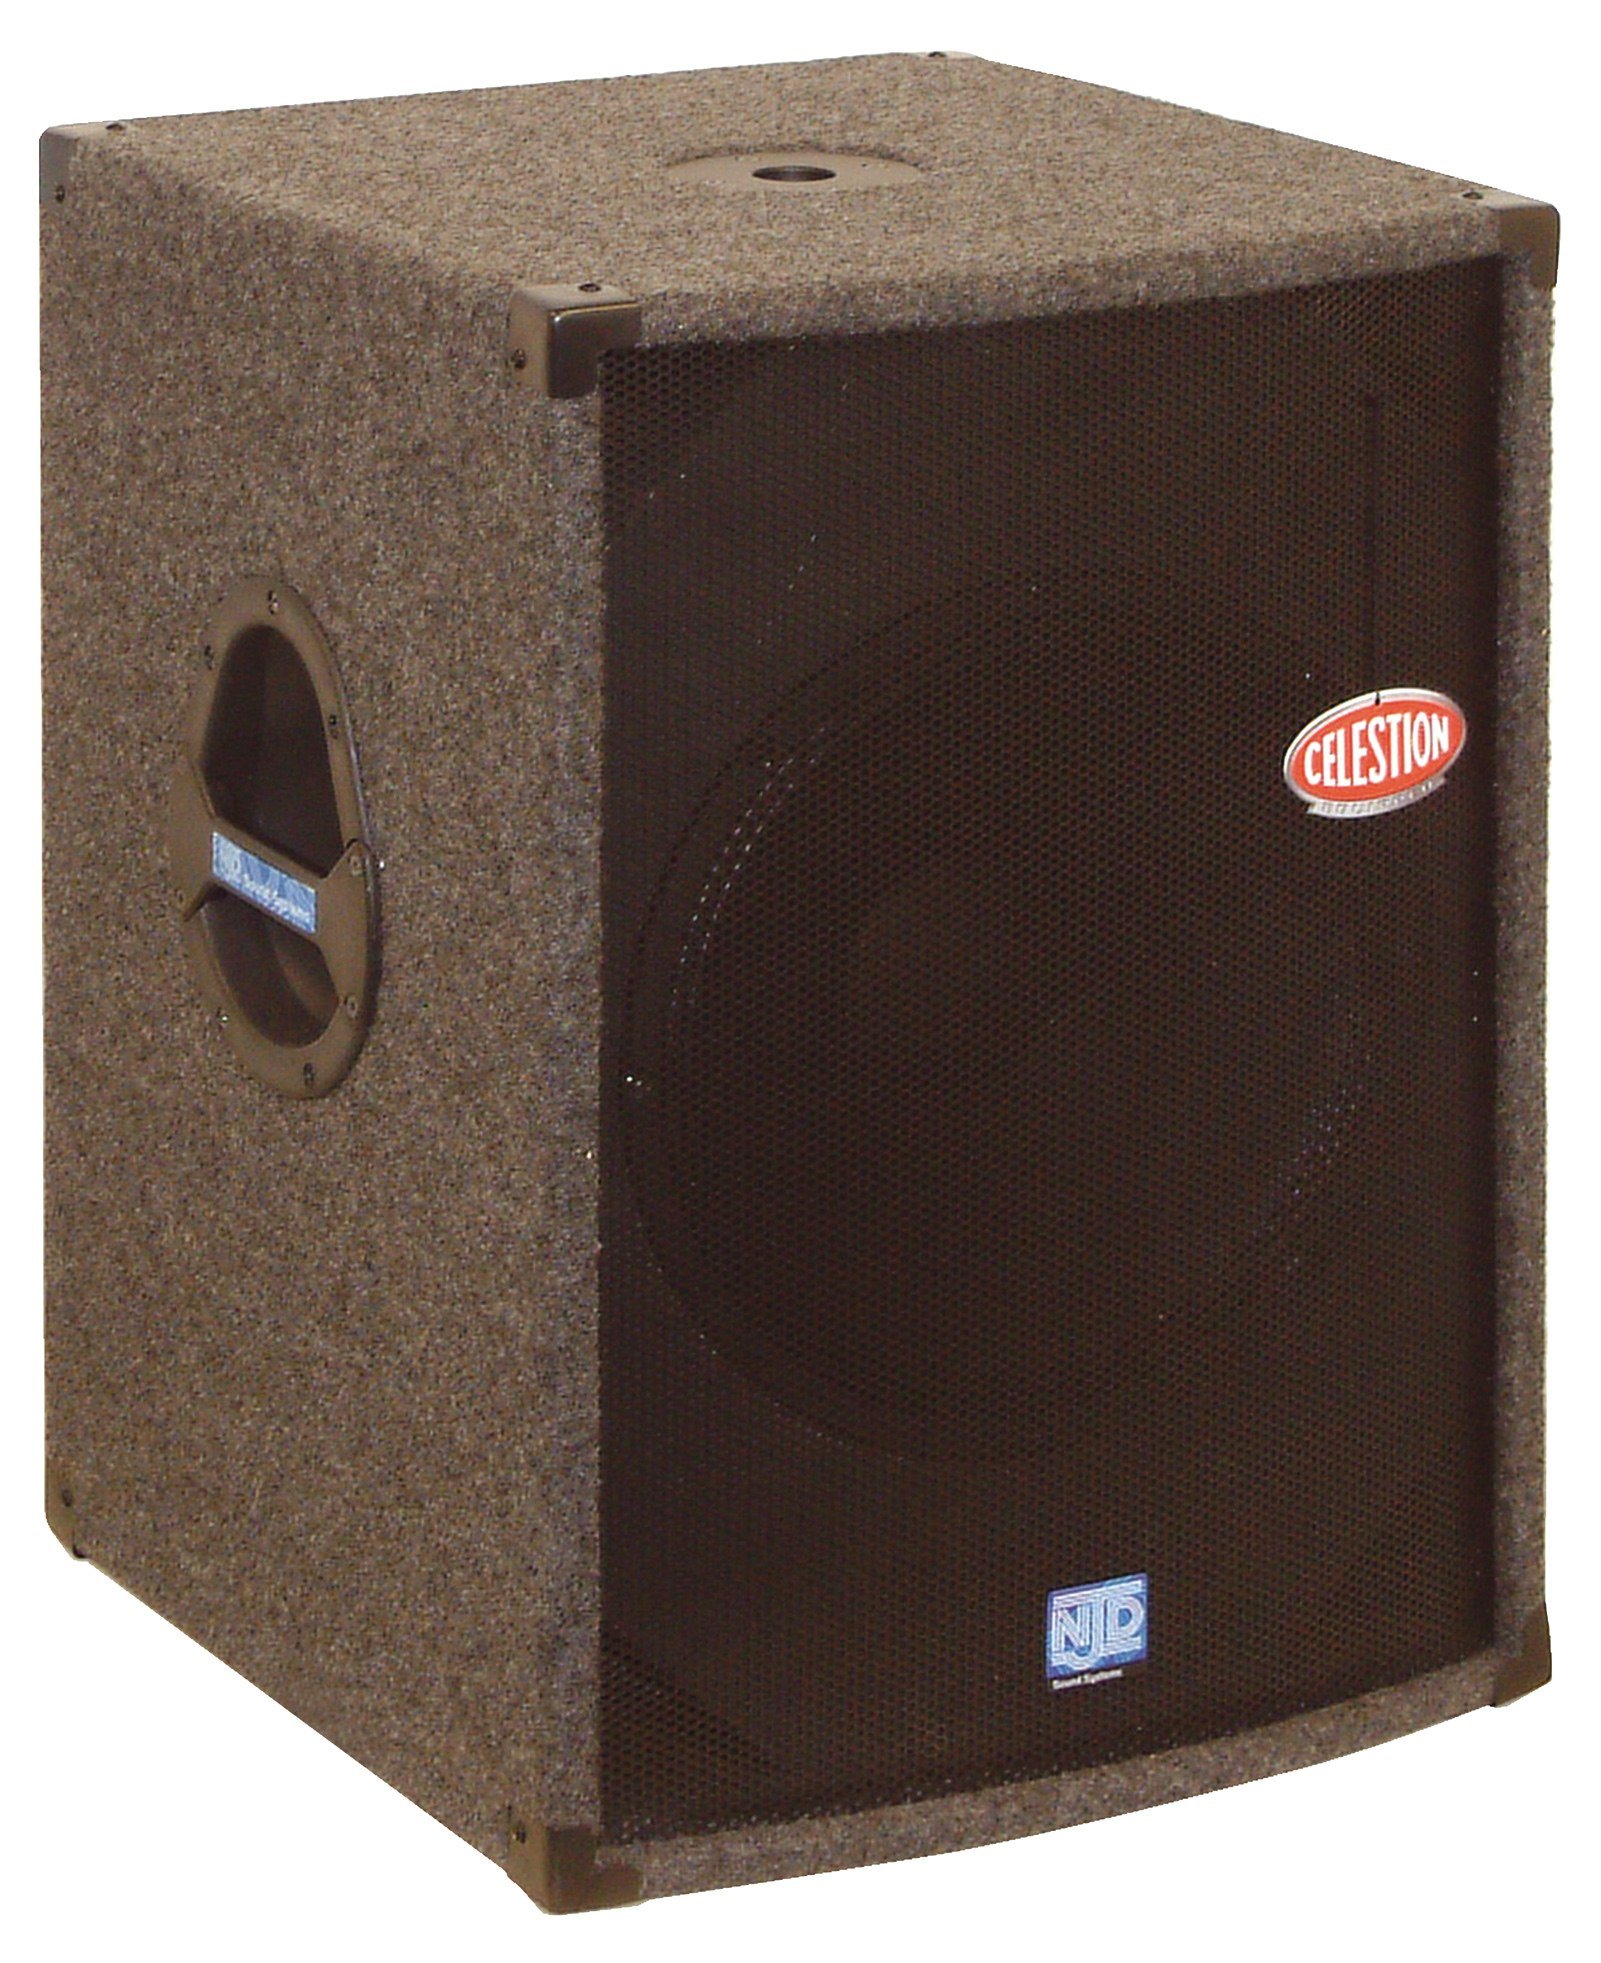 NJD Celestion 15" 400WRMS Bass Speakers NJ562